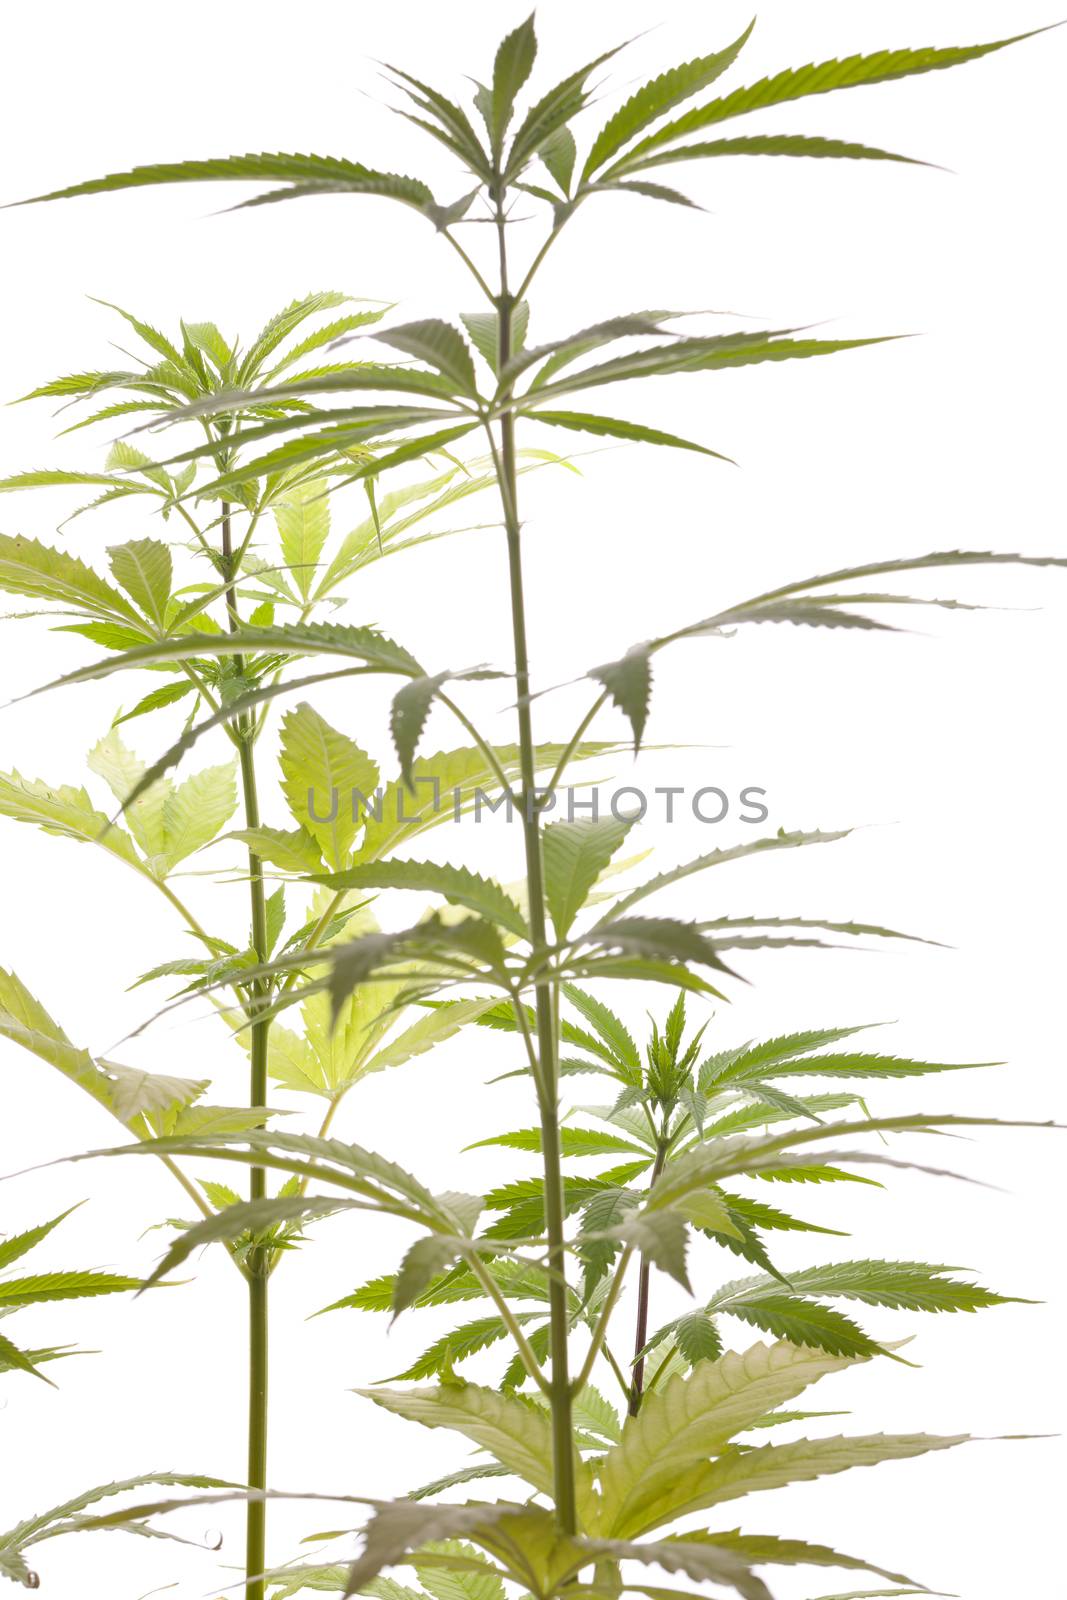 Fresh Marijuana Plant Leaves on White Background by juniart